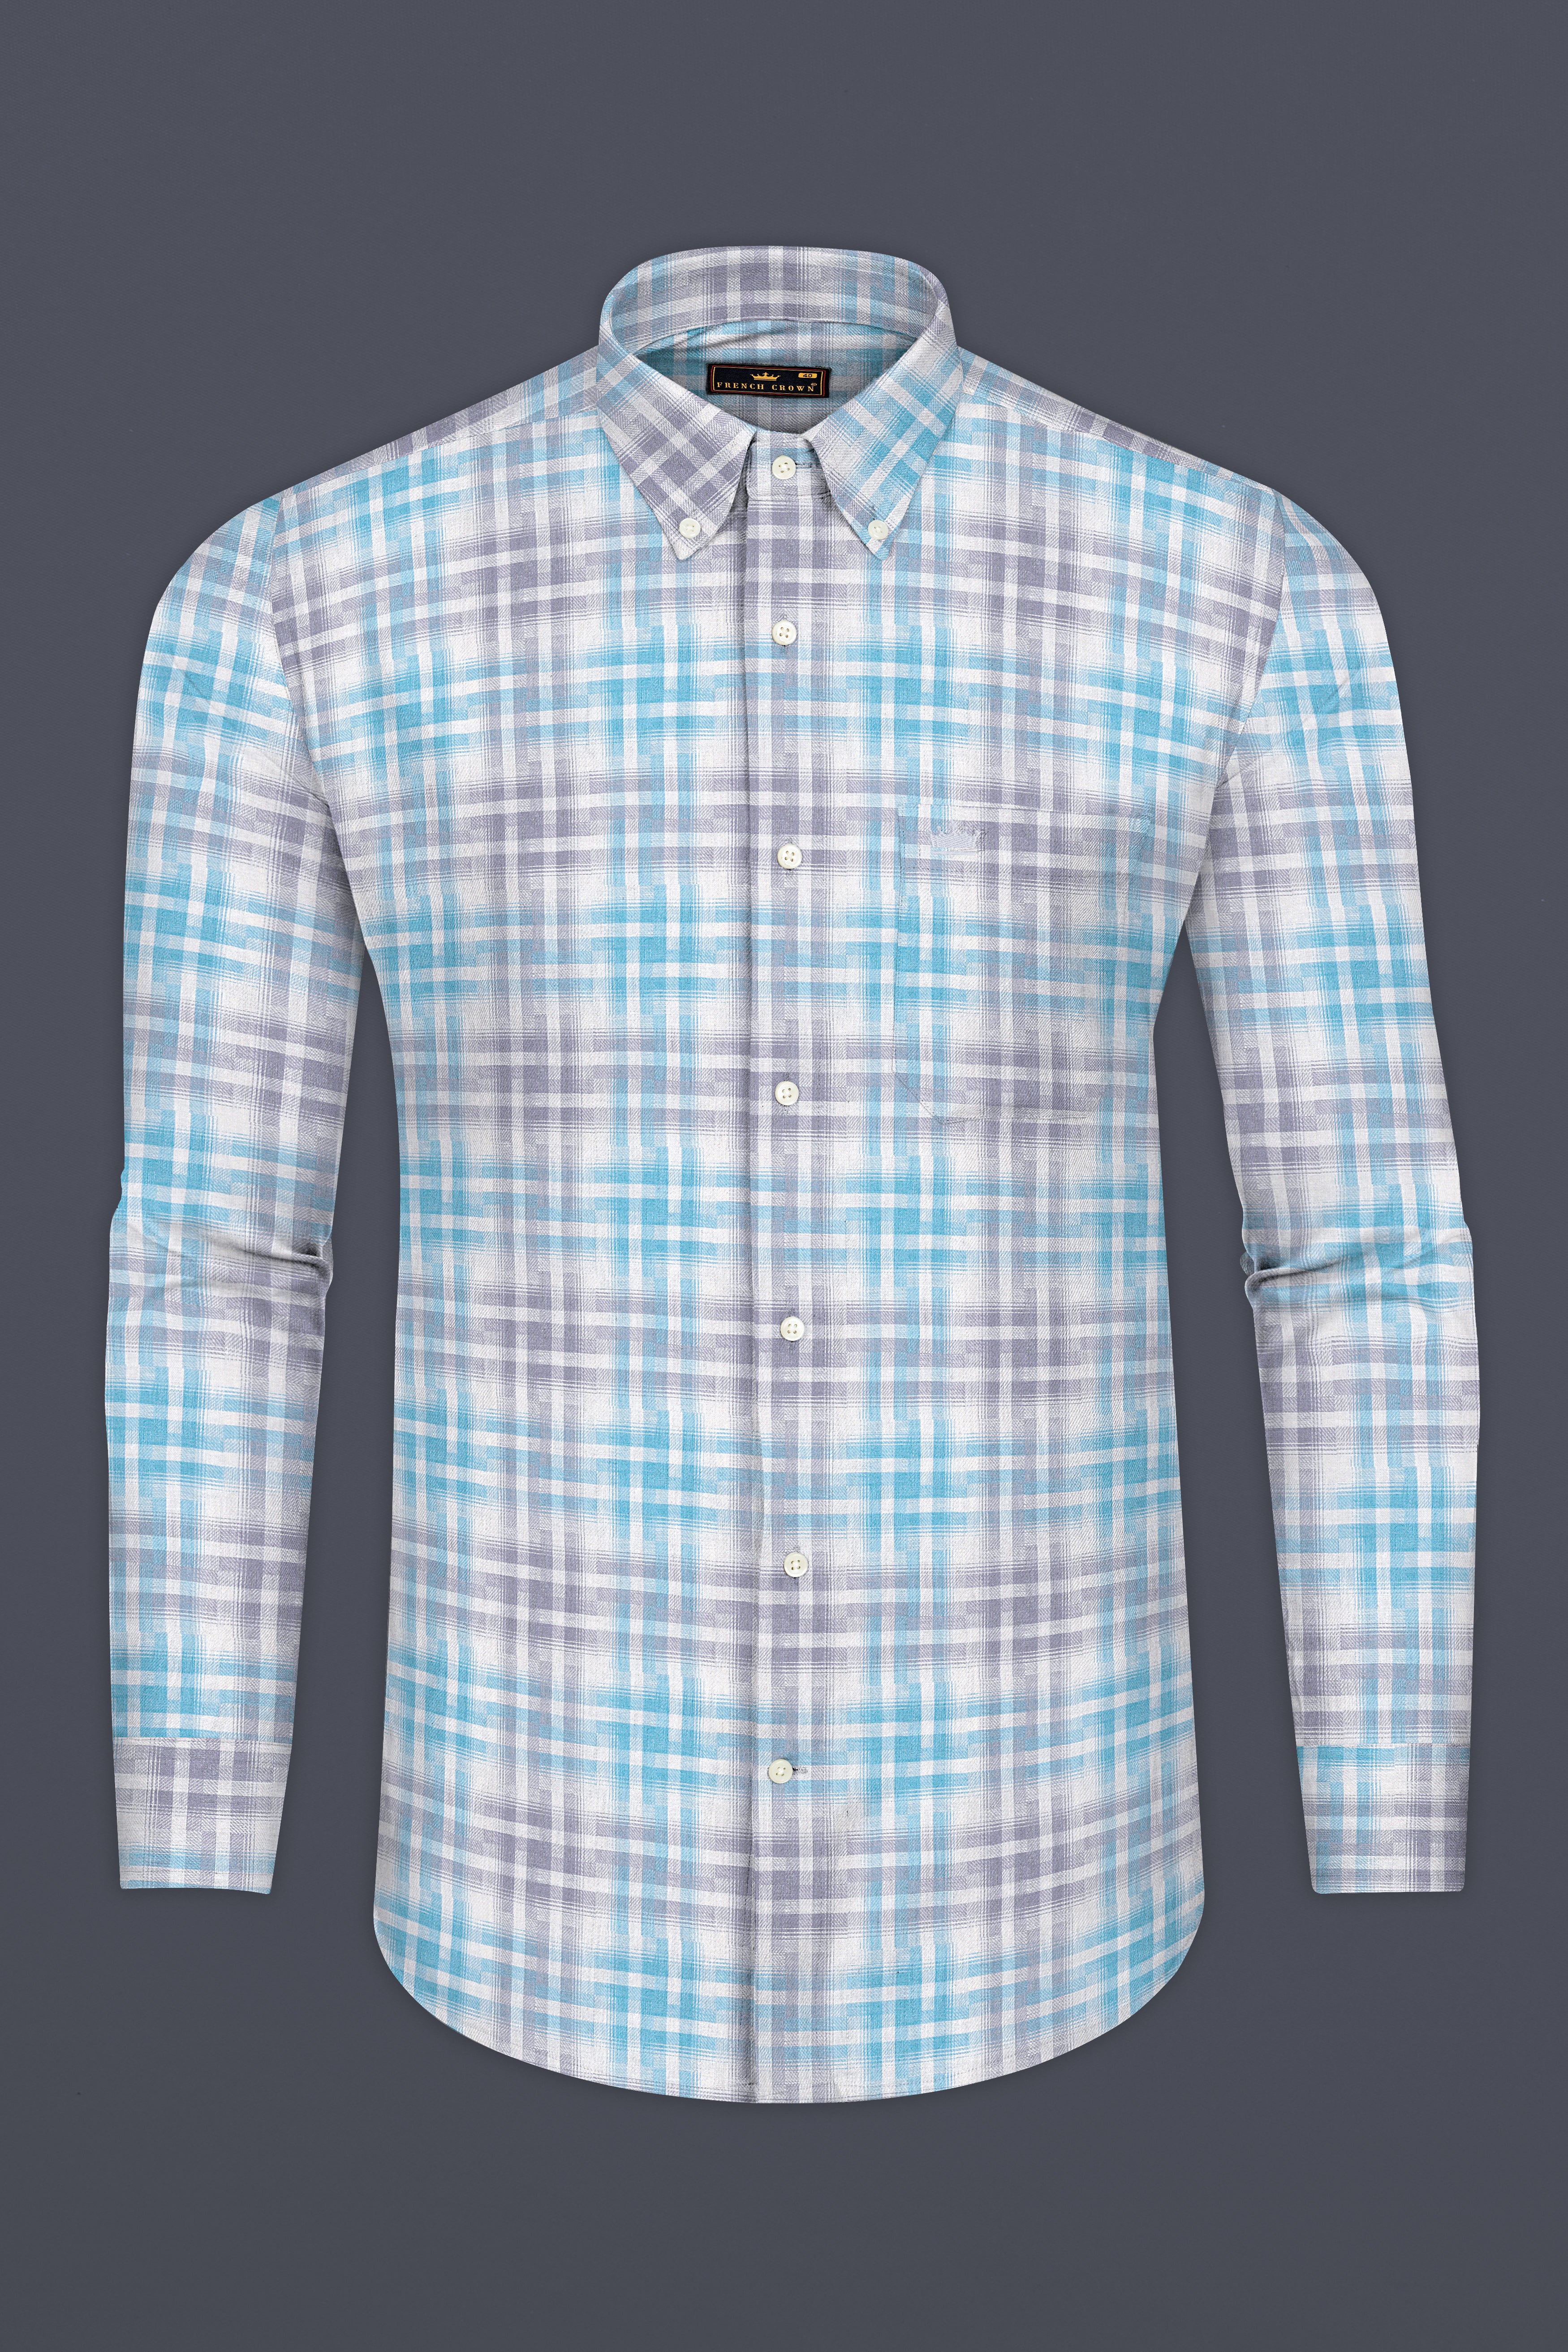 Manatee Gray with Glacier Blue Twill Plaid Premium Cotton Shirt